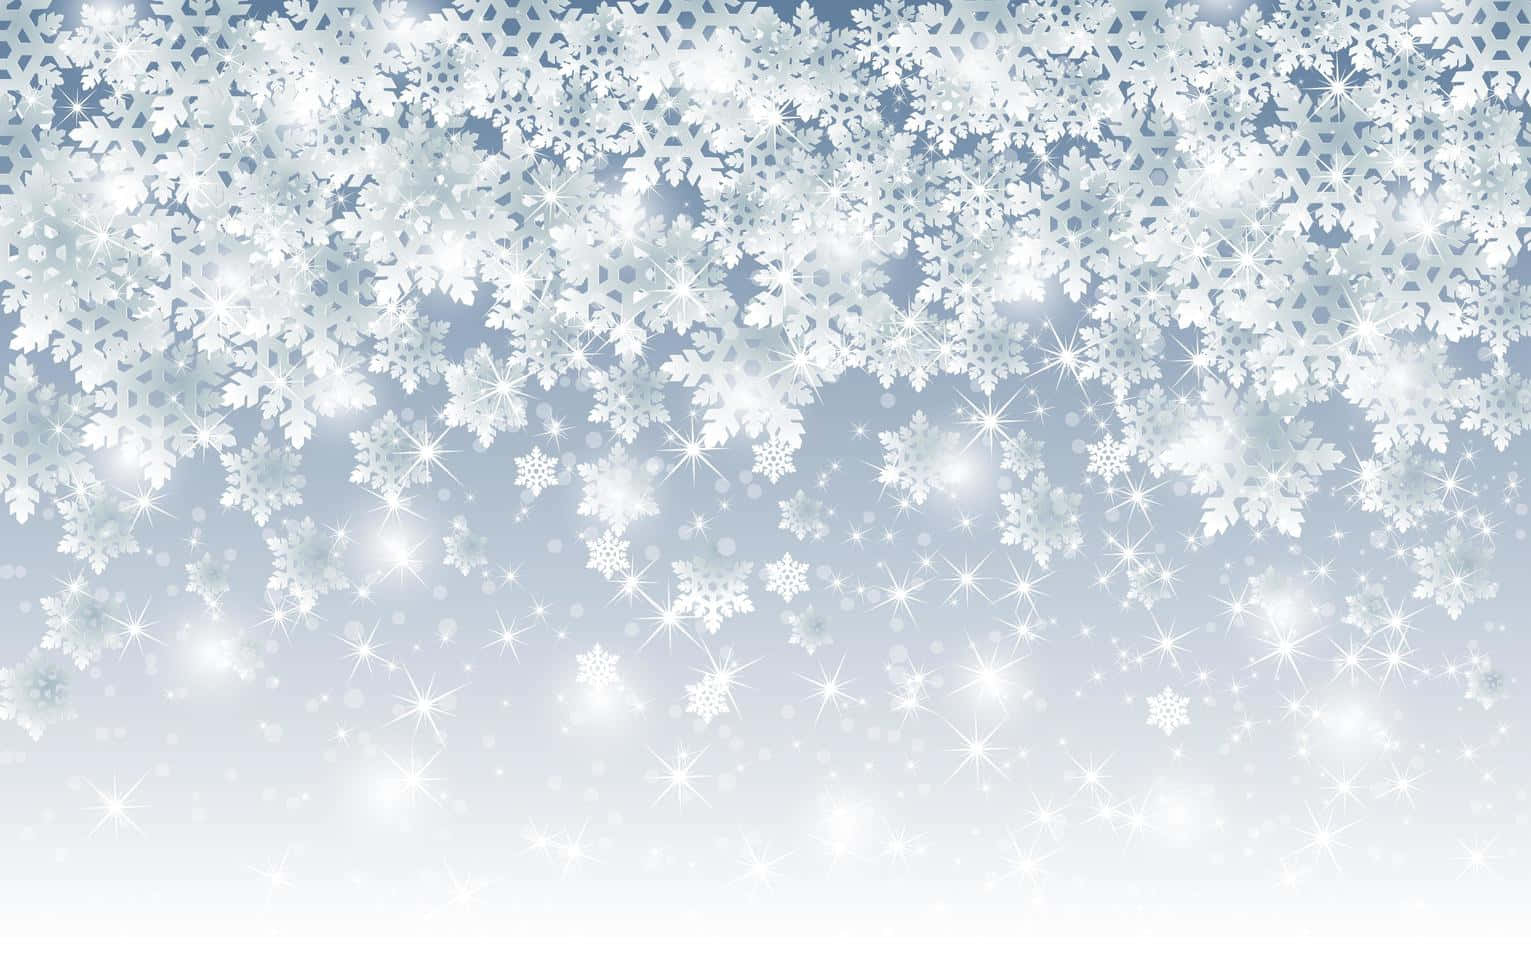 Sparkly Frozen Snowflakes Background Design